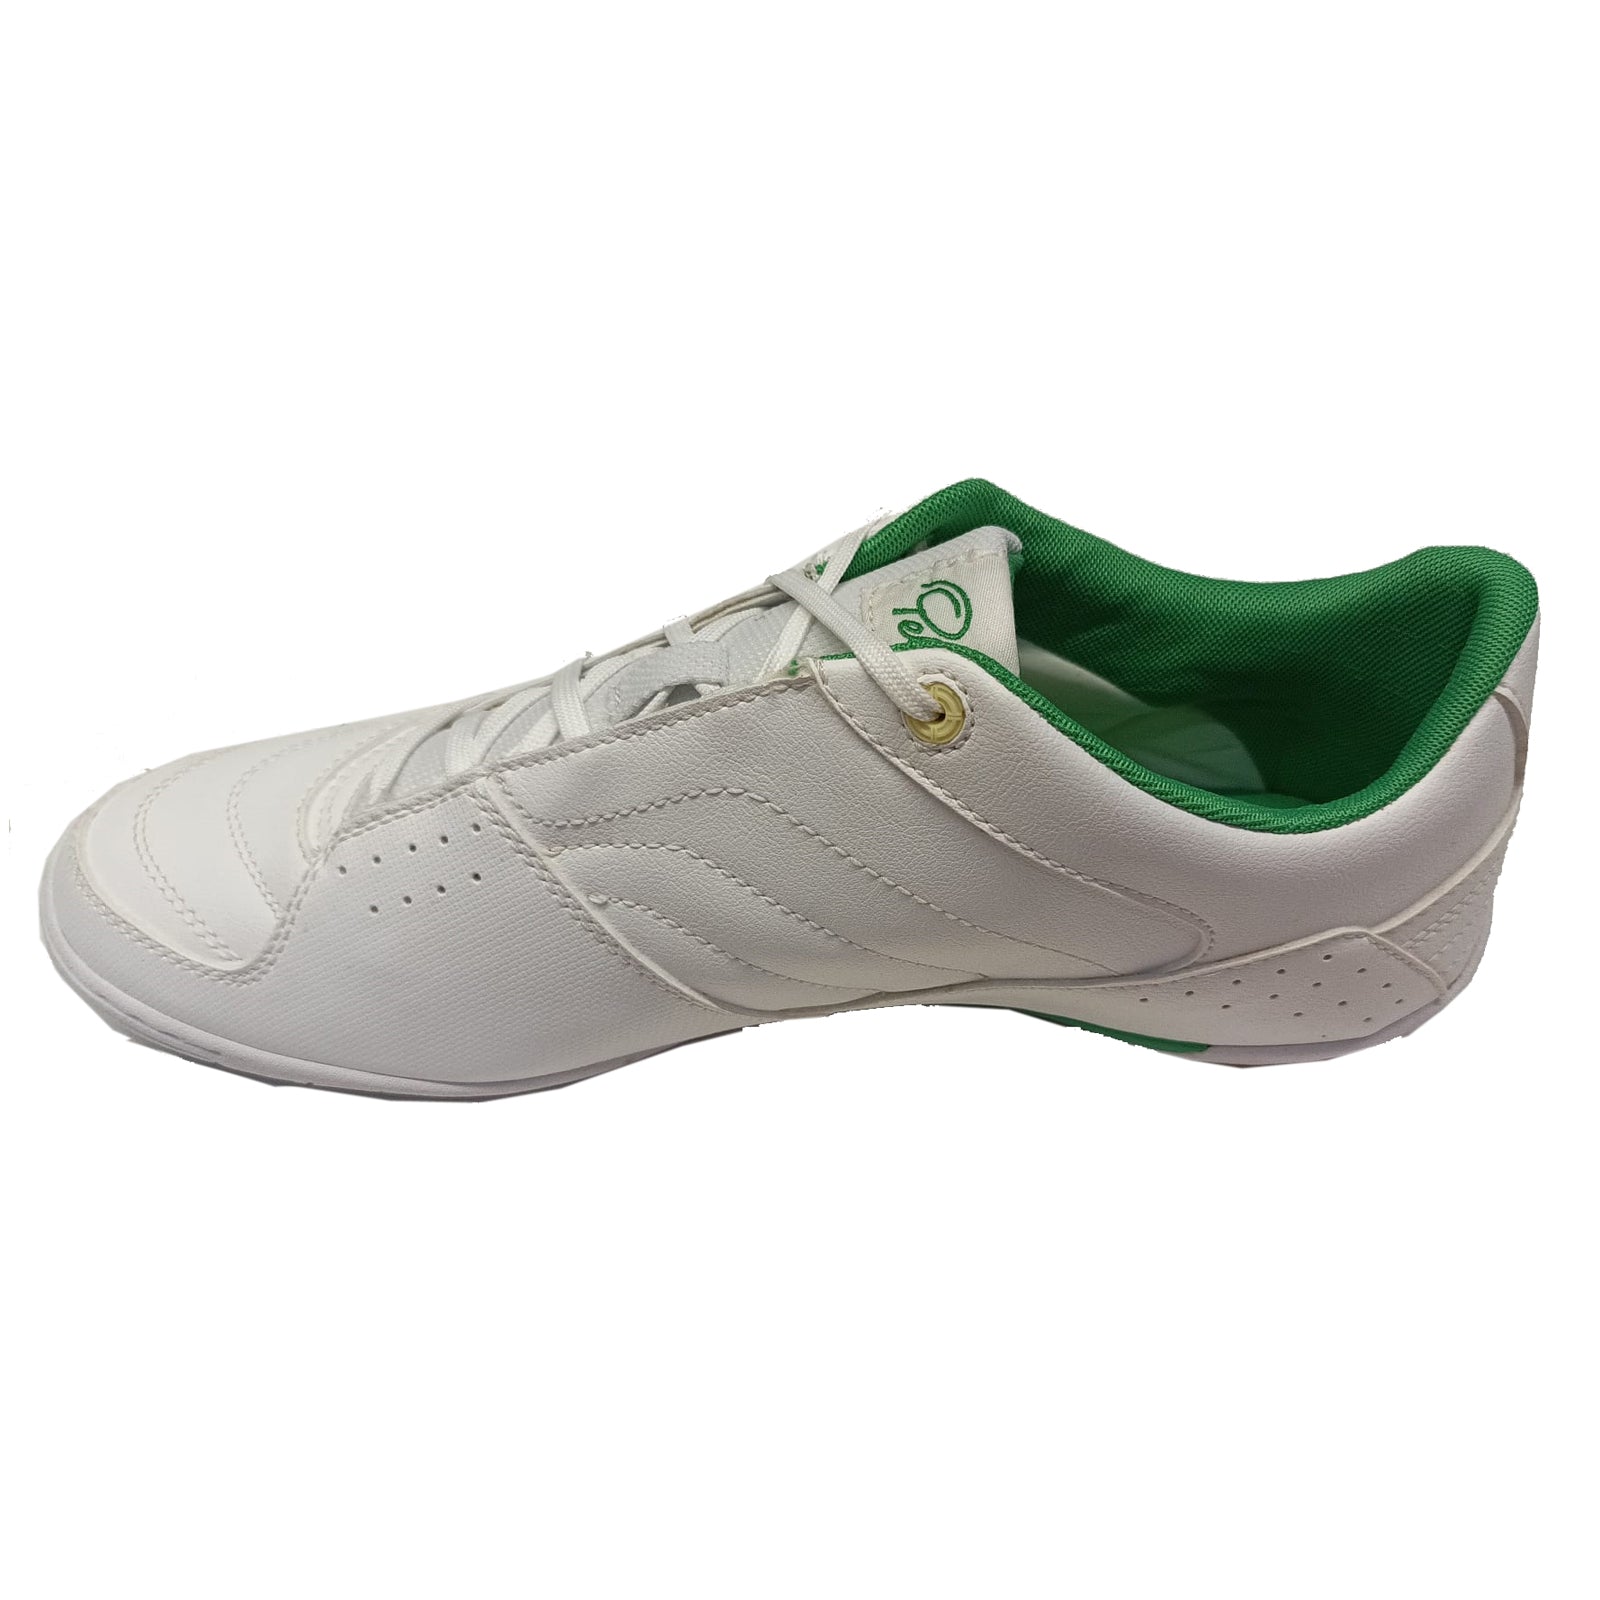 Pele Sports Setembro Men's Football Boots - White Running/Hyper Green